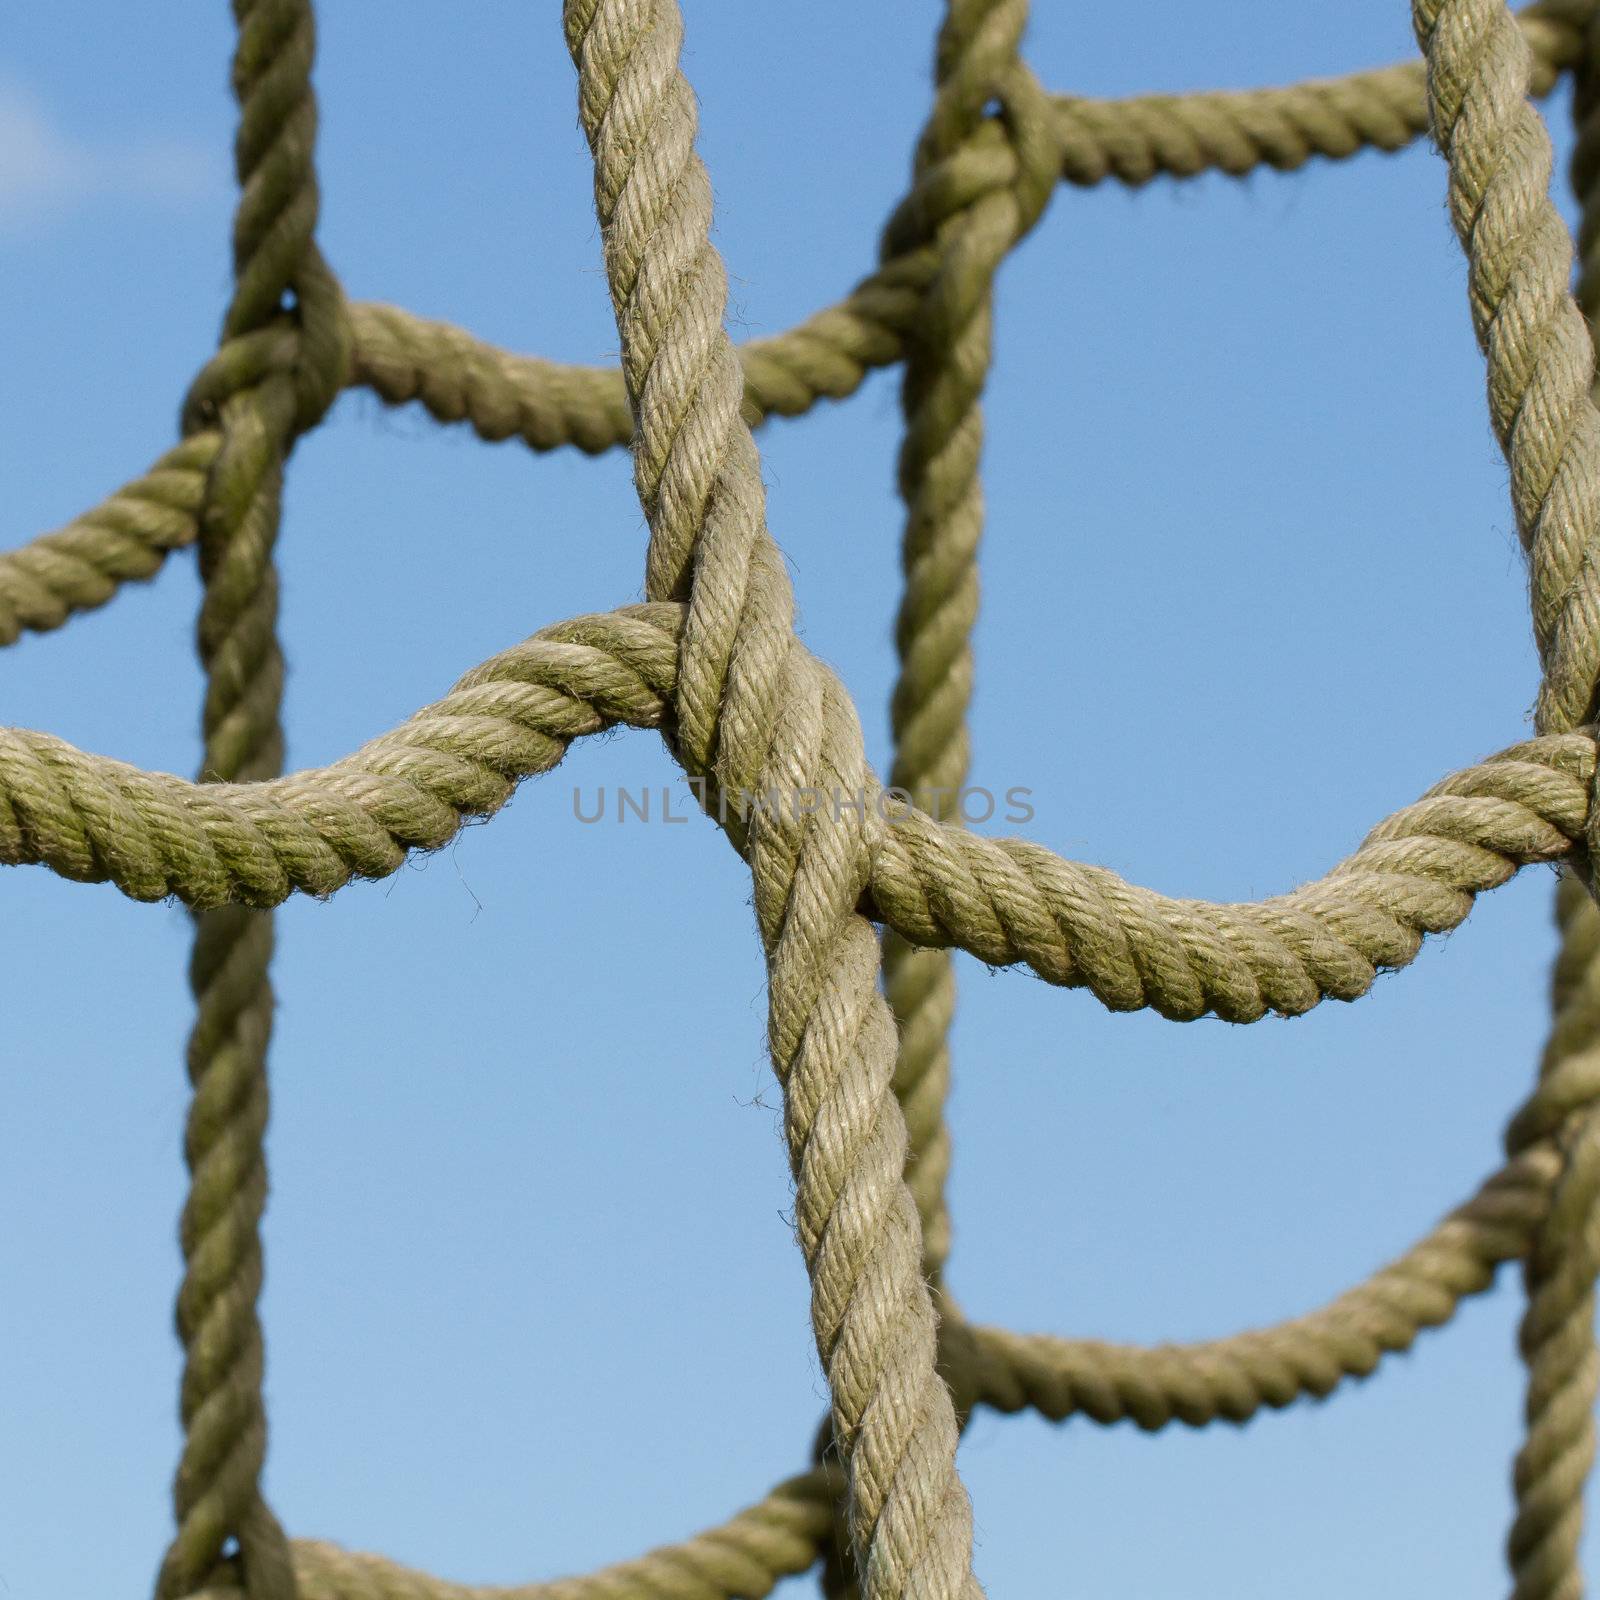 Rope net used for children climbing, blue sky